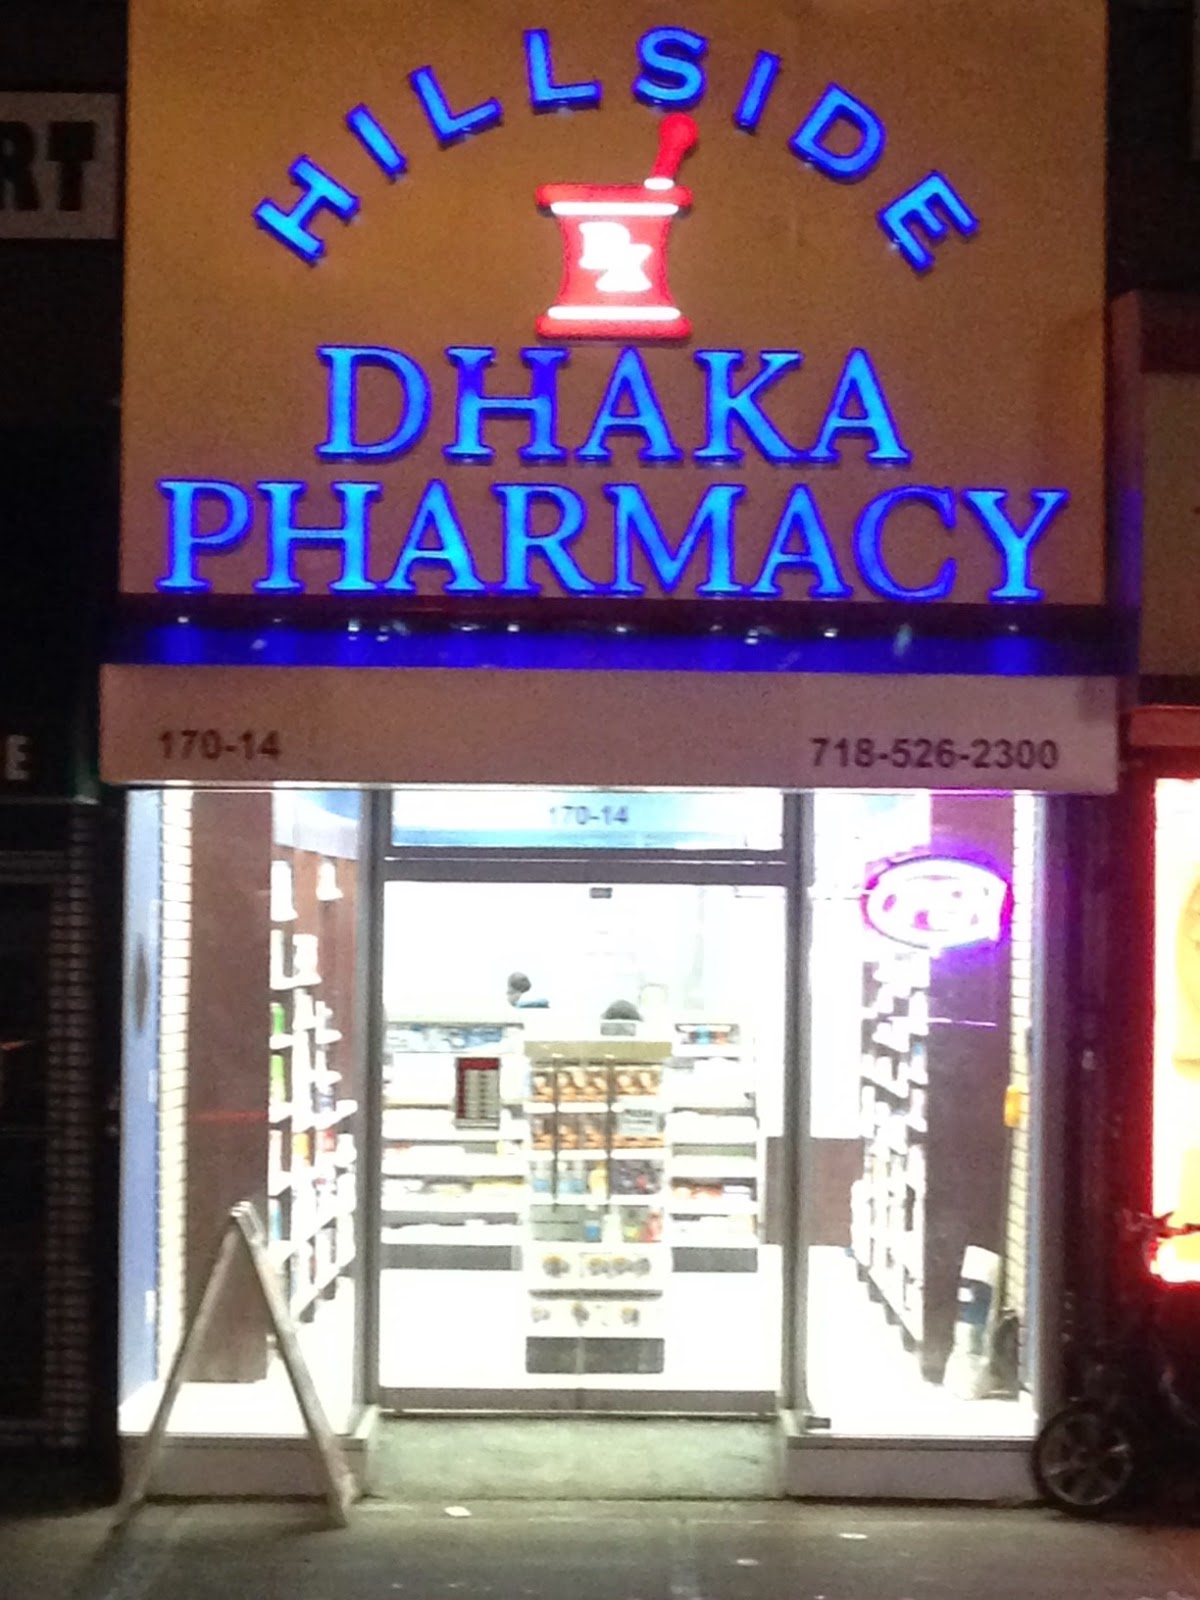 Photo of Hillside Dhaka Pharmacy in New York City, New York, United States - 1 Picture of Point of interest, Establishment, Store, Health, Pharmacy